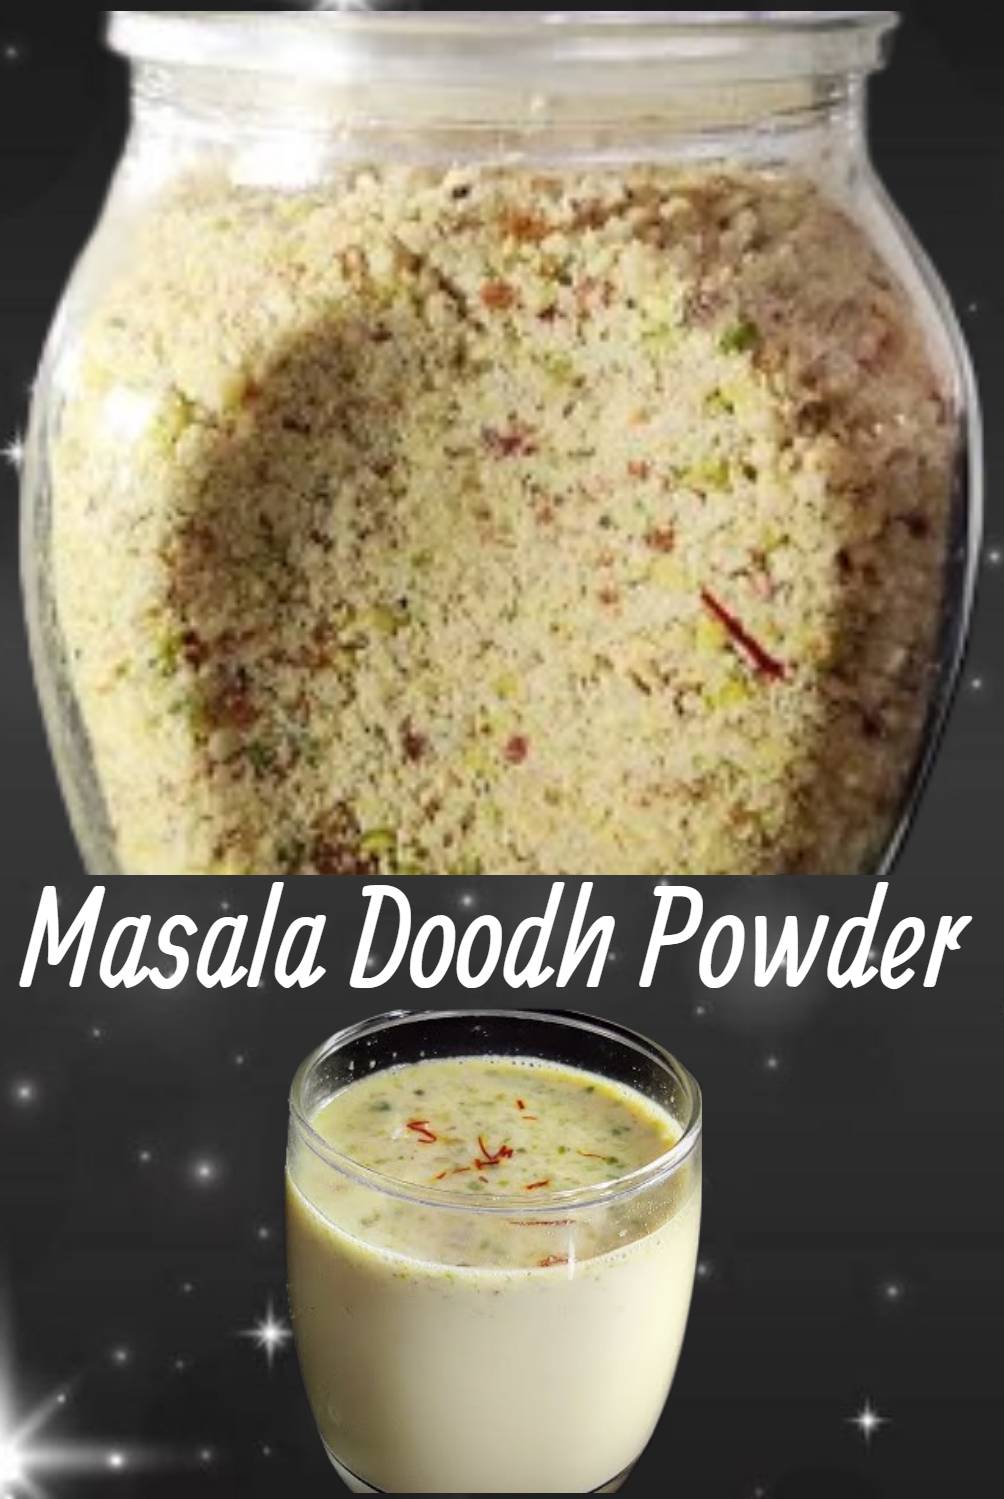 Masala Doodh Powder